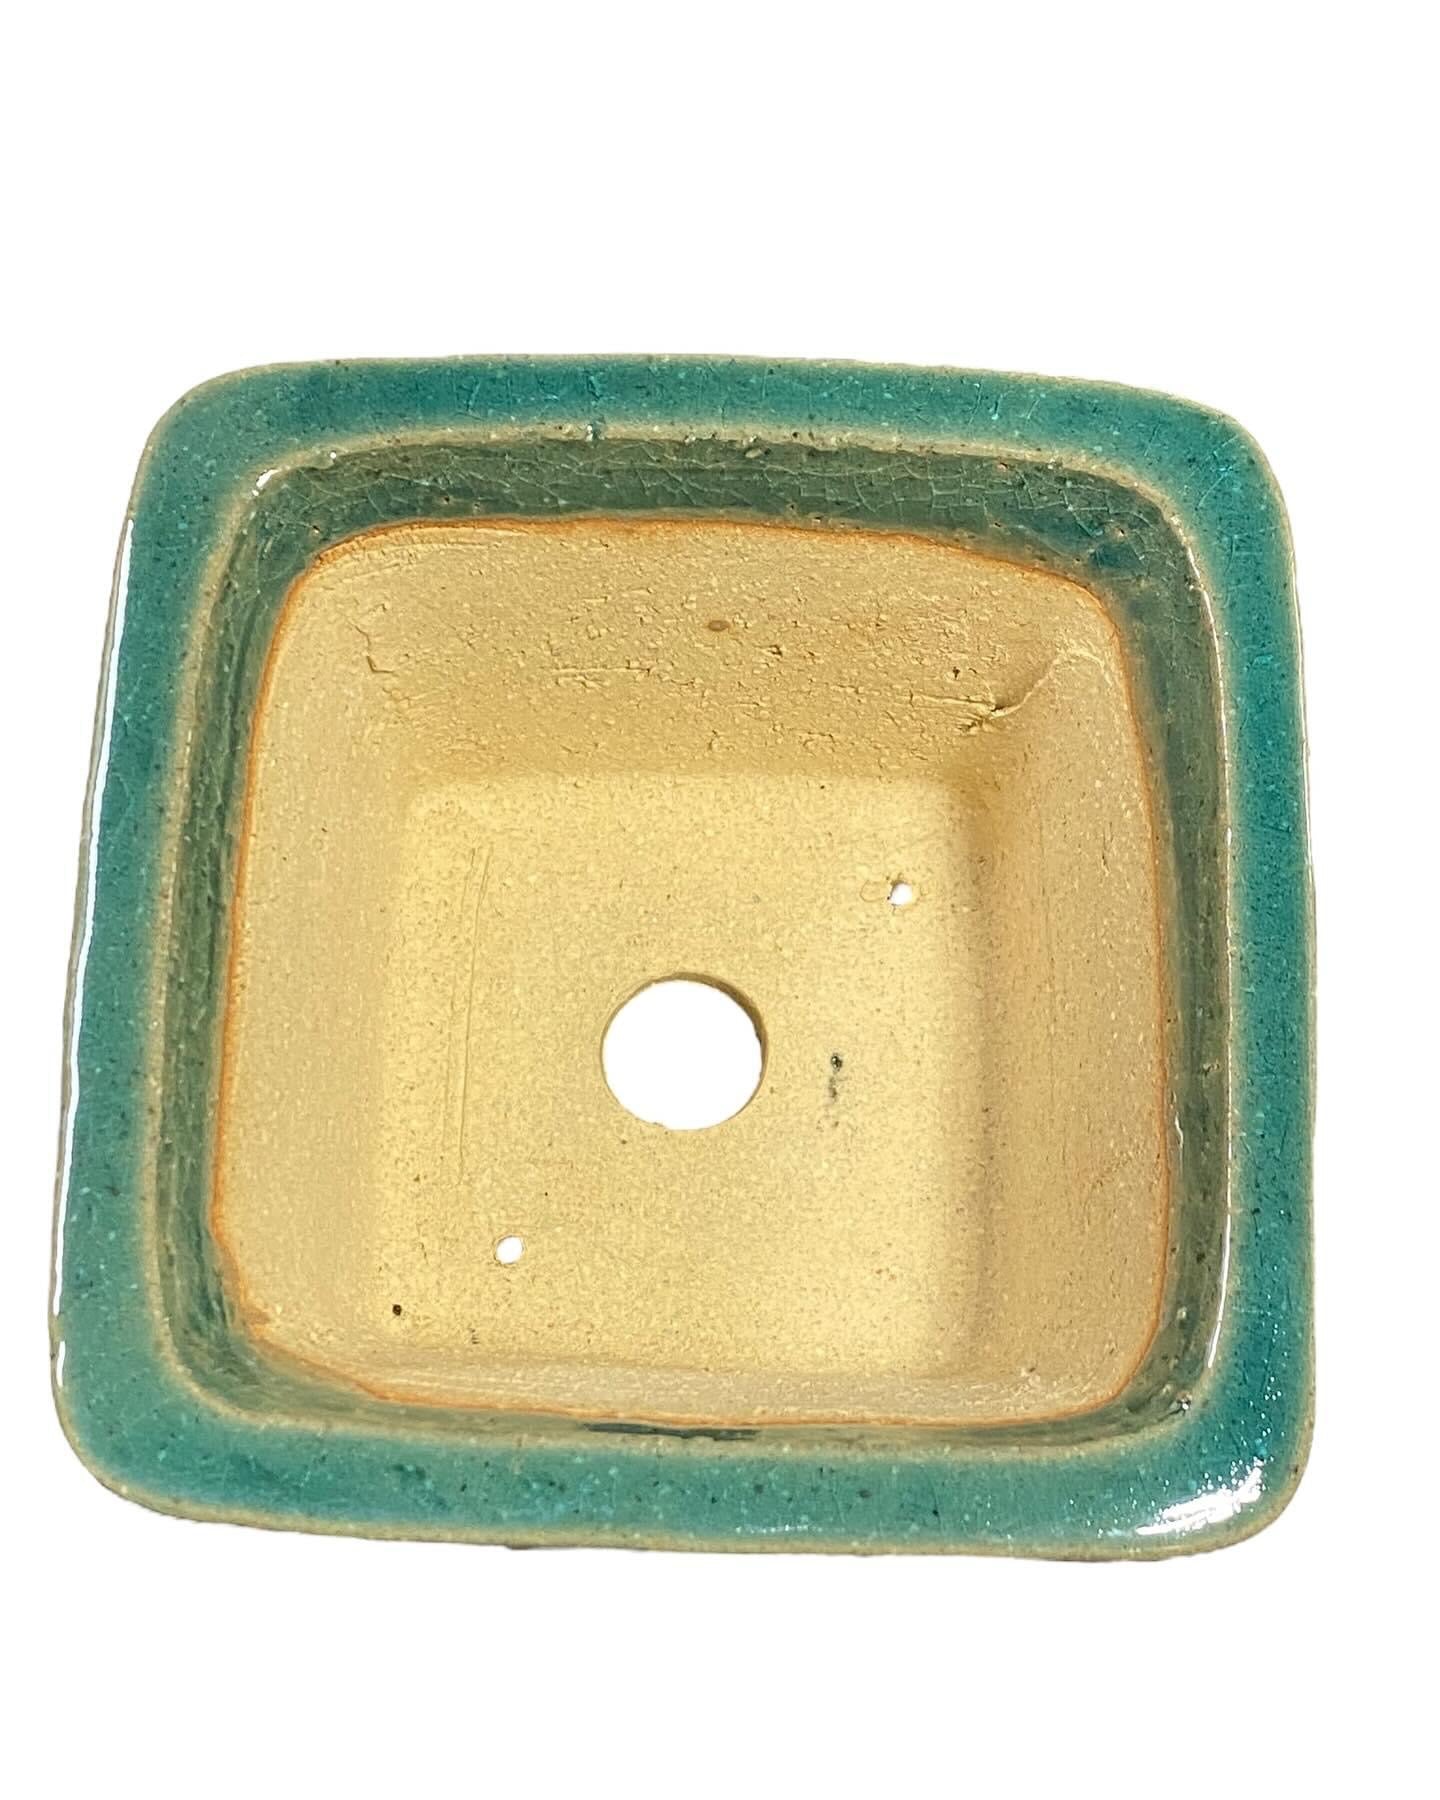 Shibakatsu - Exhibition Quality Crackle Glazed Bonsai Pot (4-7/8” wide)